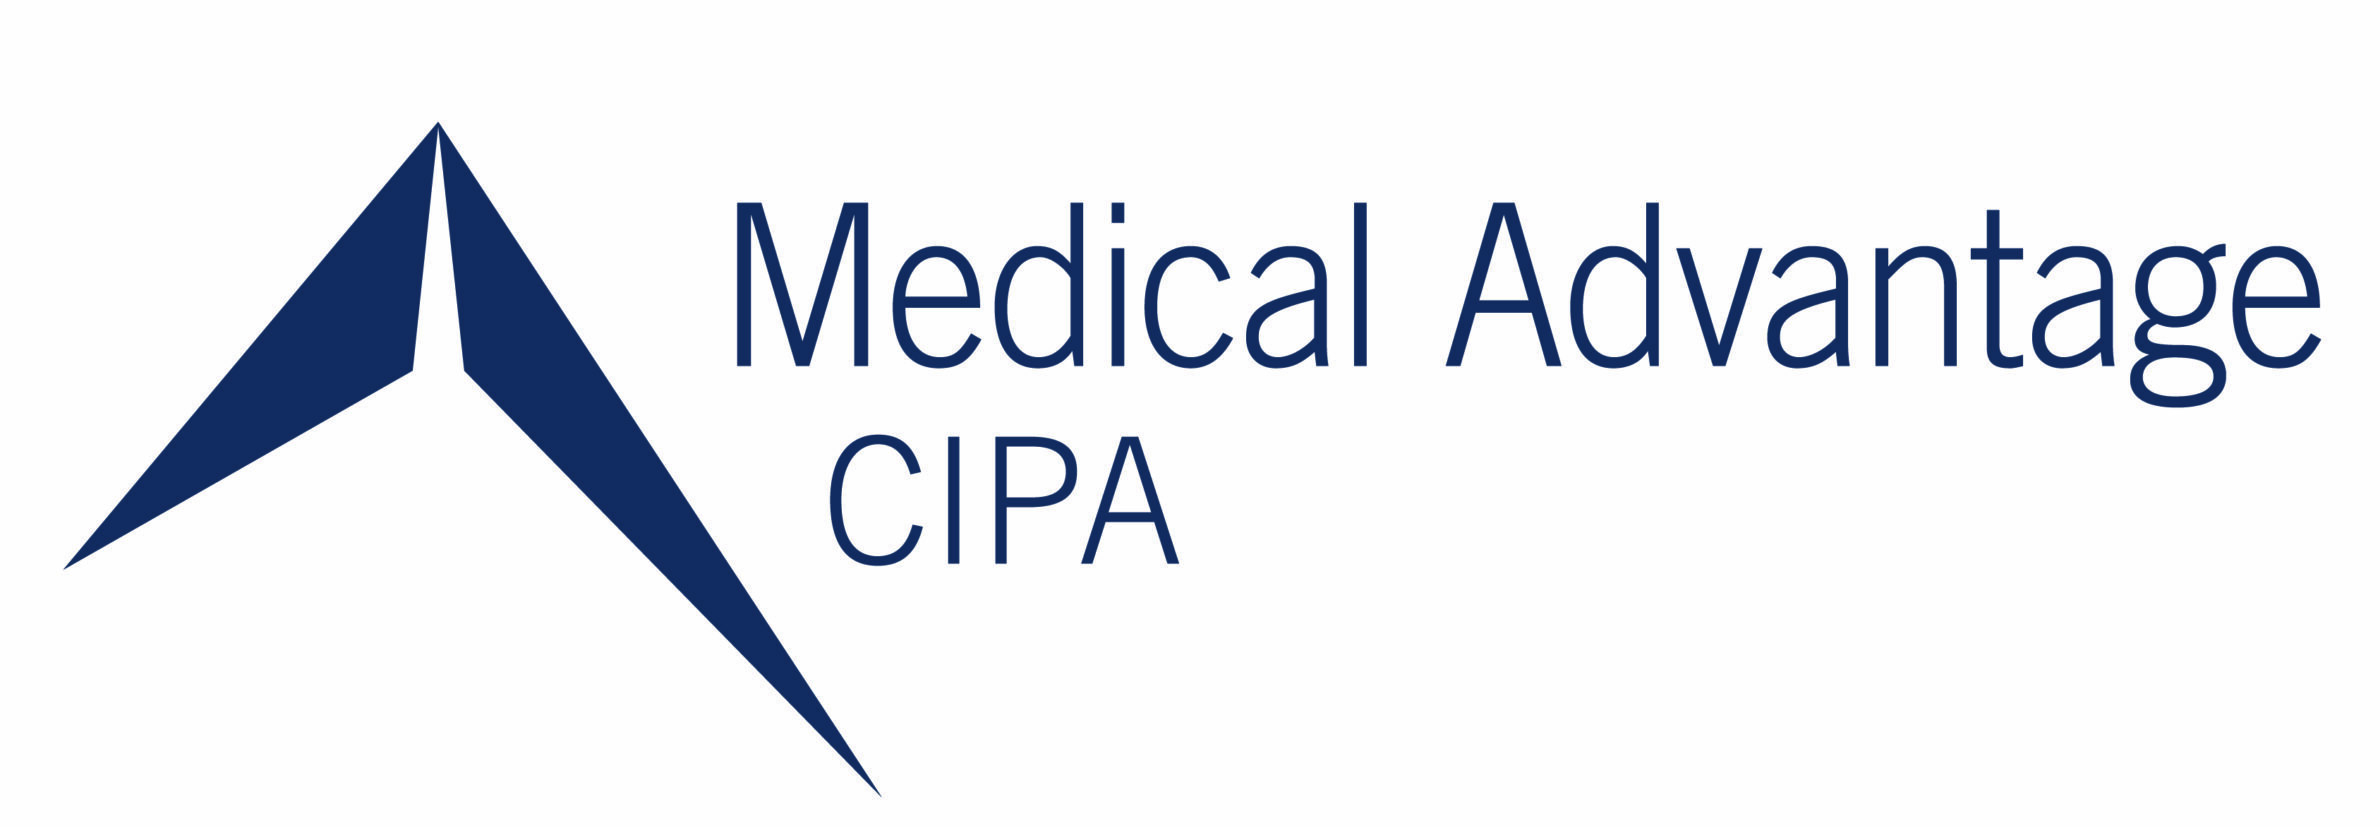 CIPA logo_blue